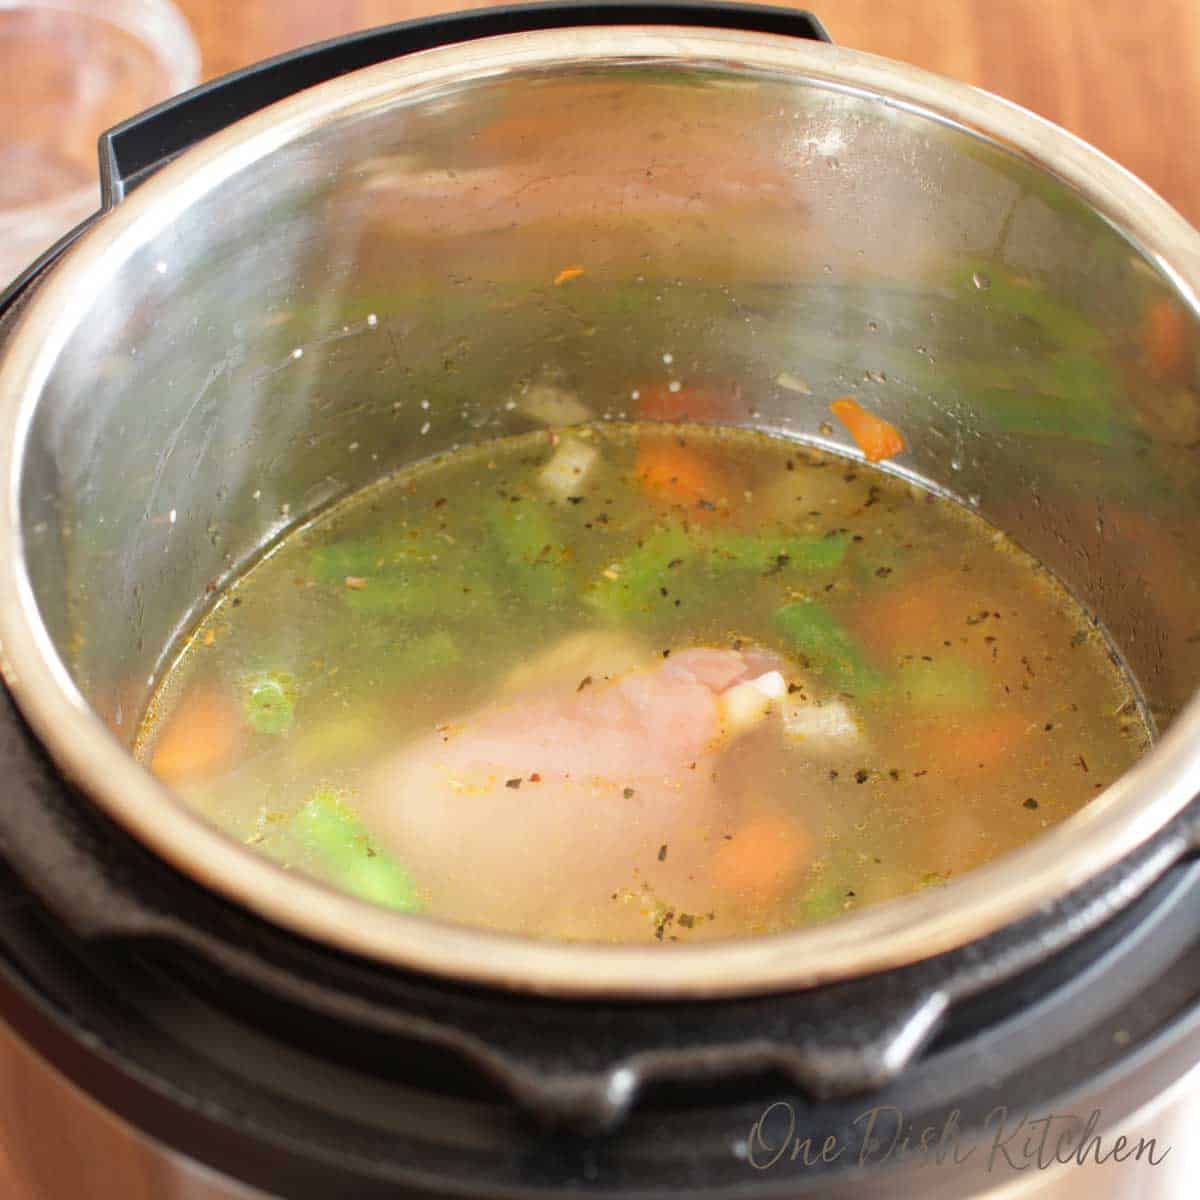 https://onedishkitchen.com/wp-content/uploads/2019/10/instant-pot-chicken-noodle-soup-one-dish-kitchen-4.jpg